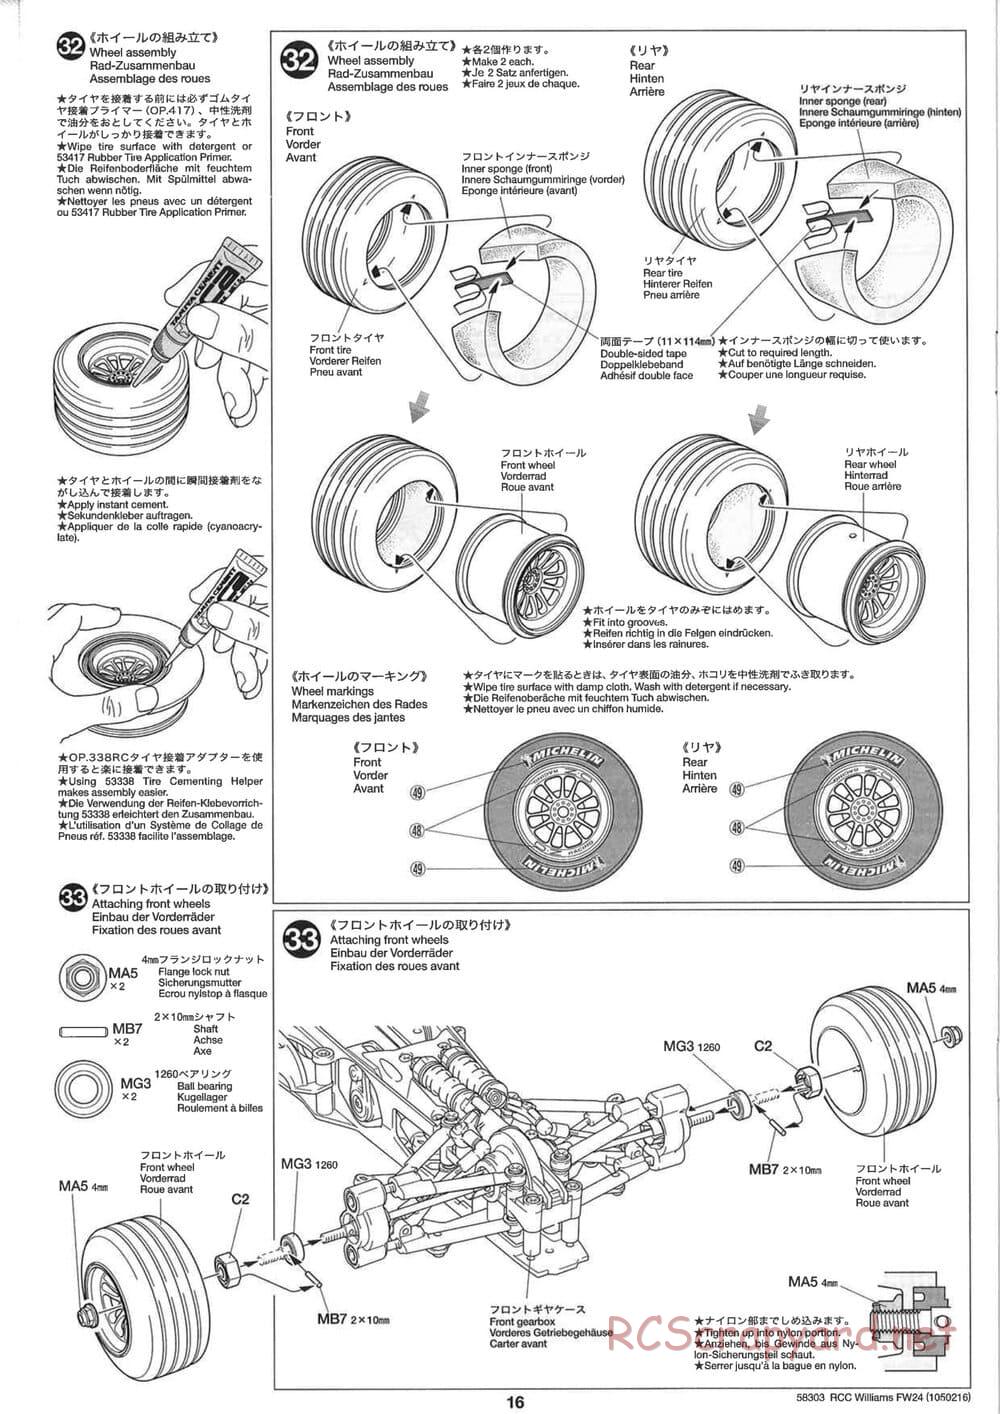 Tamiya - Williams F1 BMW FW24 - F201 Chassis - Manual - Page 16